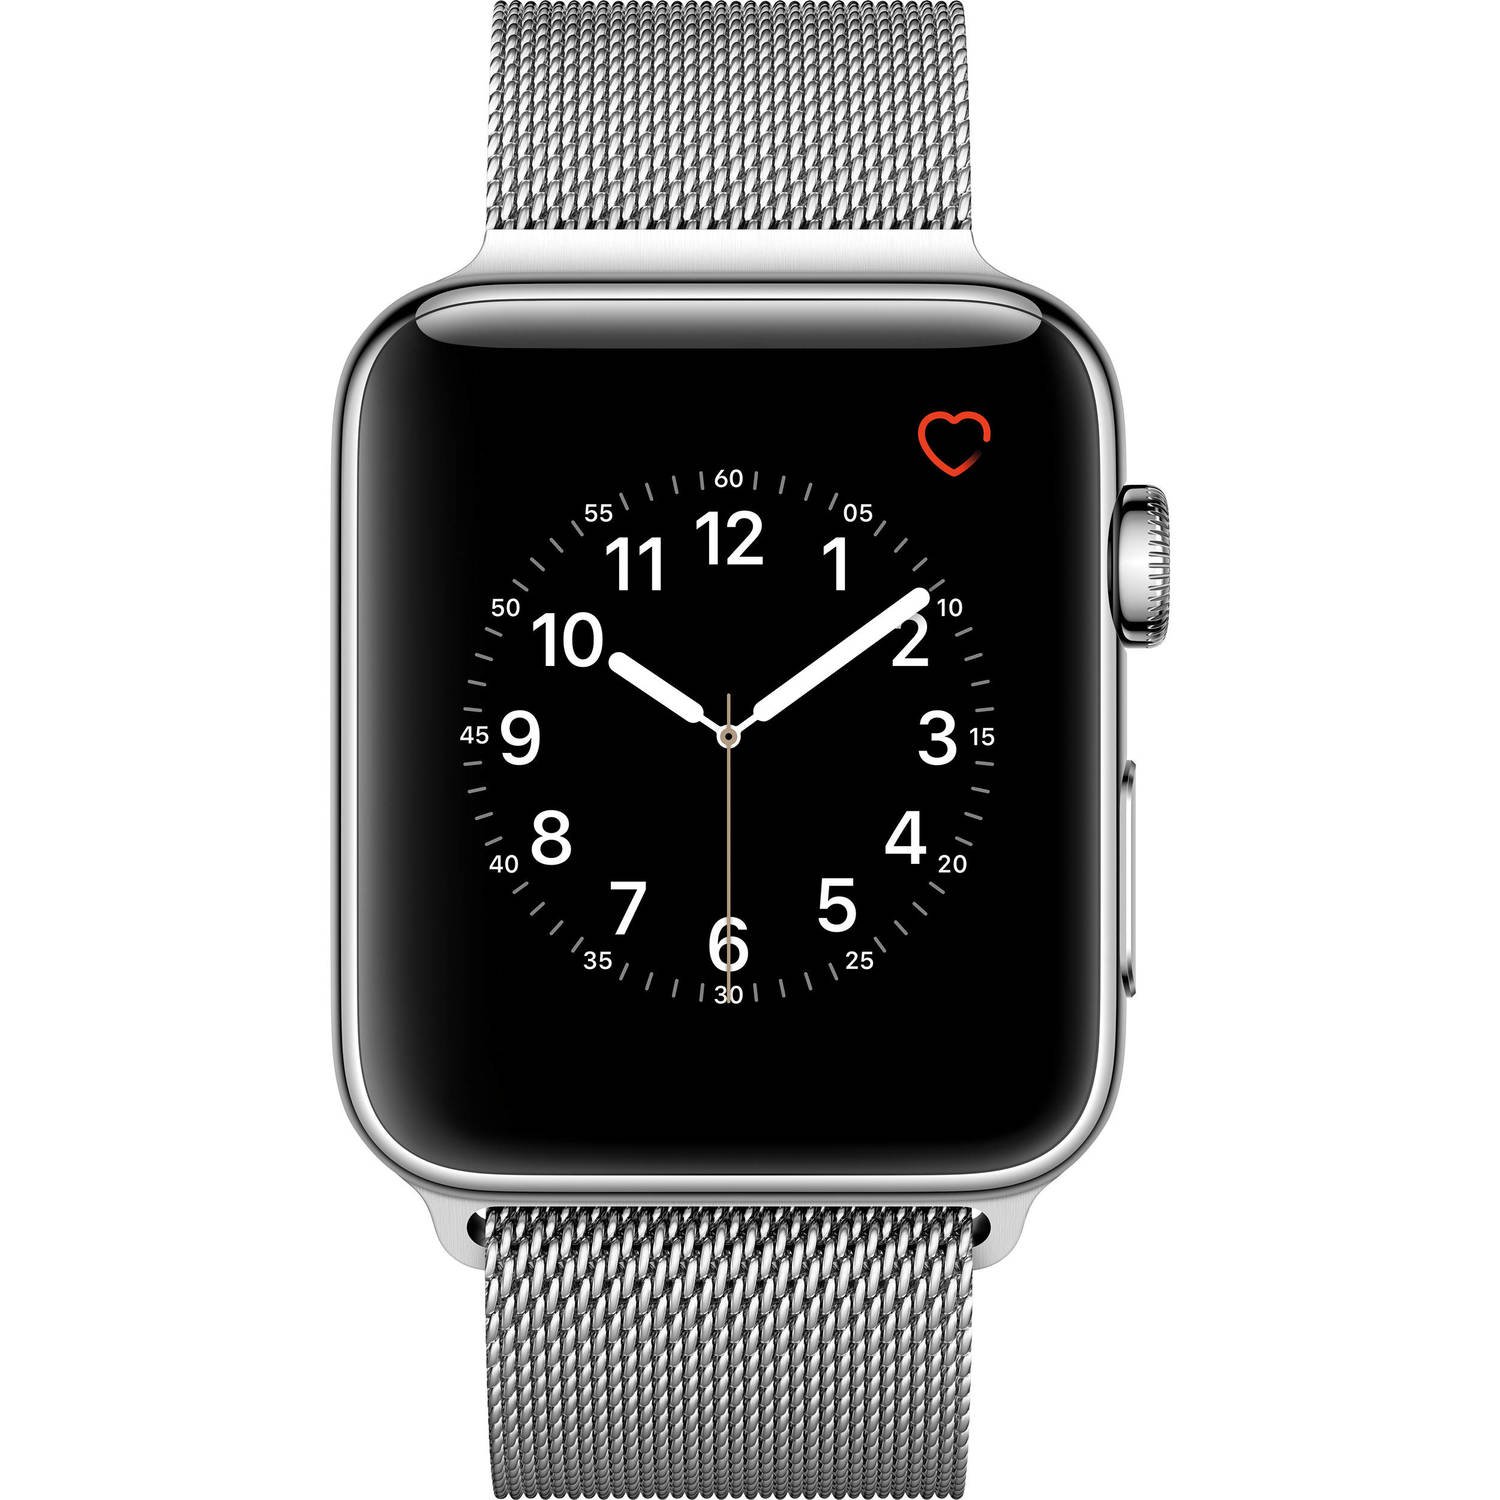 Watch часы 3 42mm. Apple watch Series 3 38mm. Часы эпл вотч 3 38 мм. Apple watch Stainless Steel 42mm. Часы Apple watch Series 2 42mm with Milanese loop.